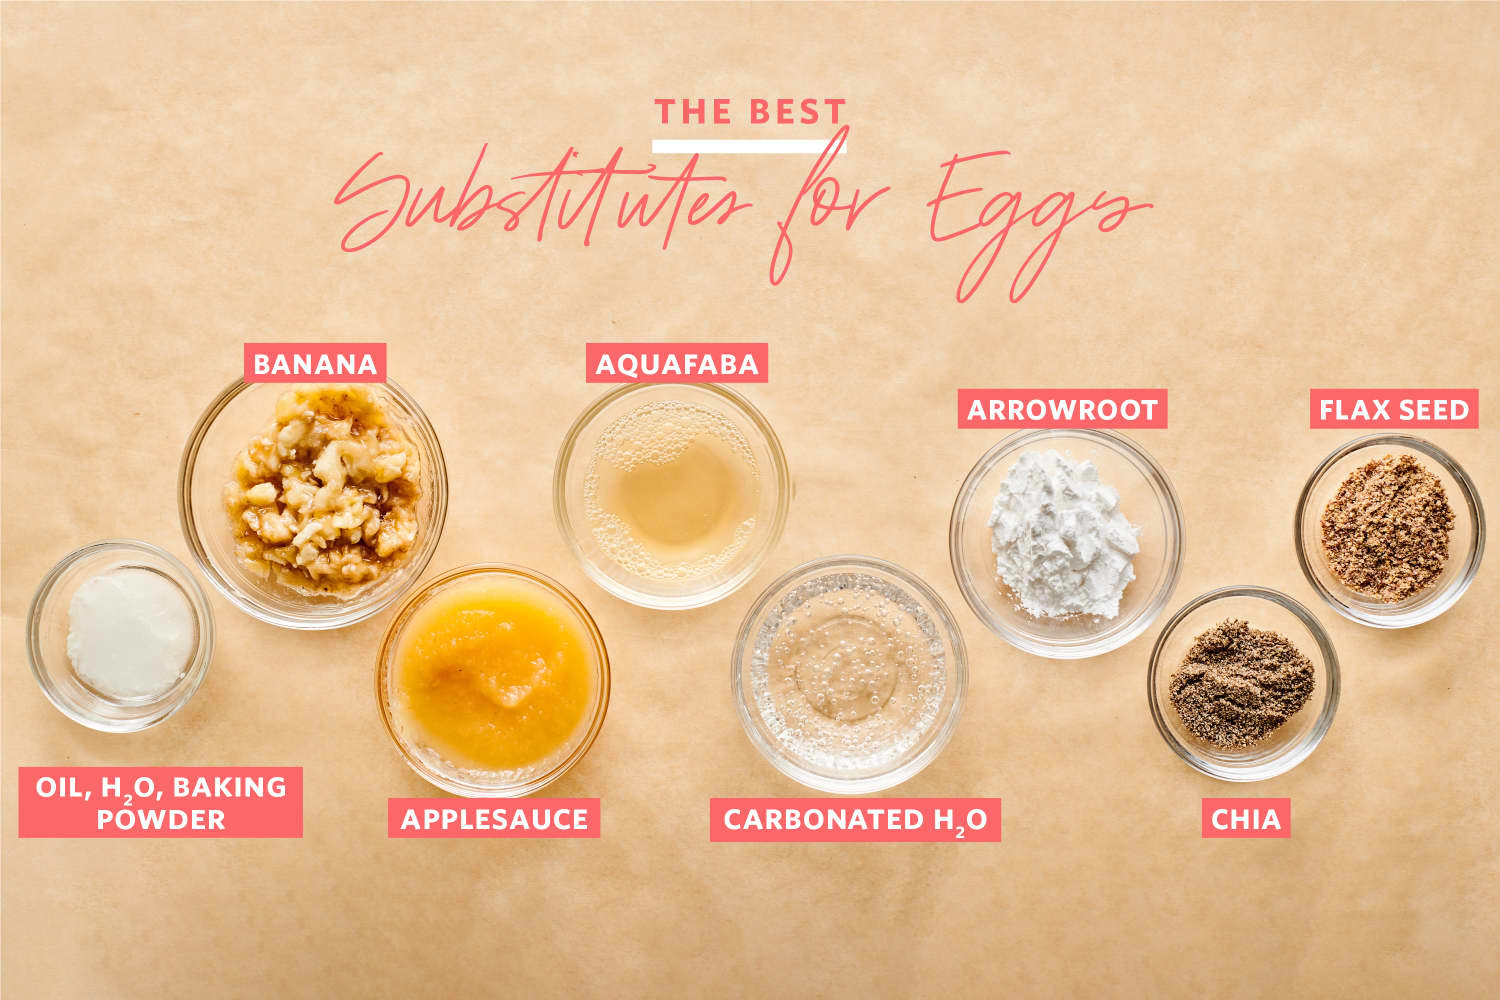 8 Alternative Uses of Eggs